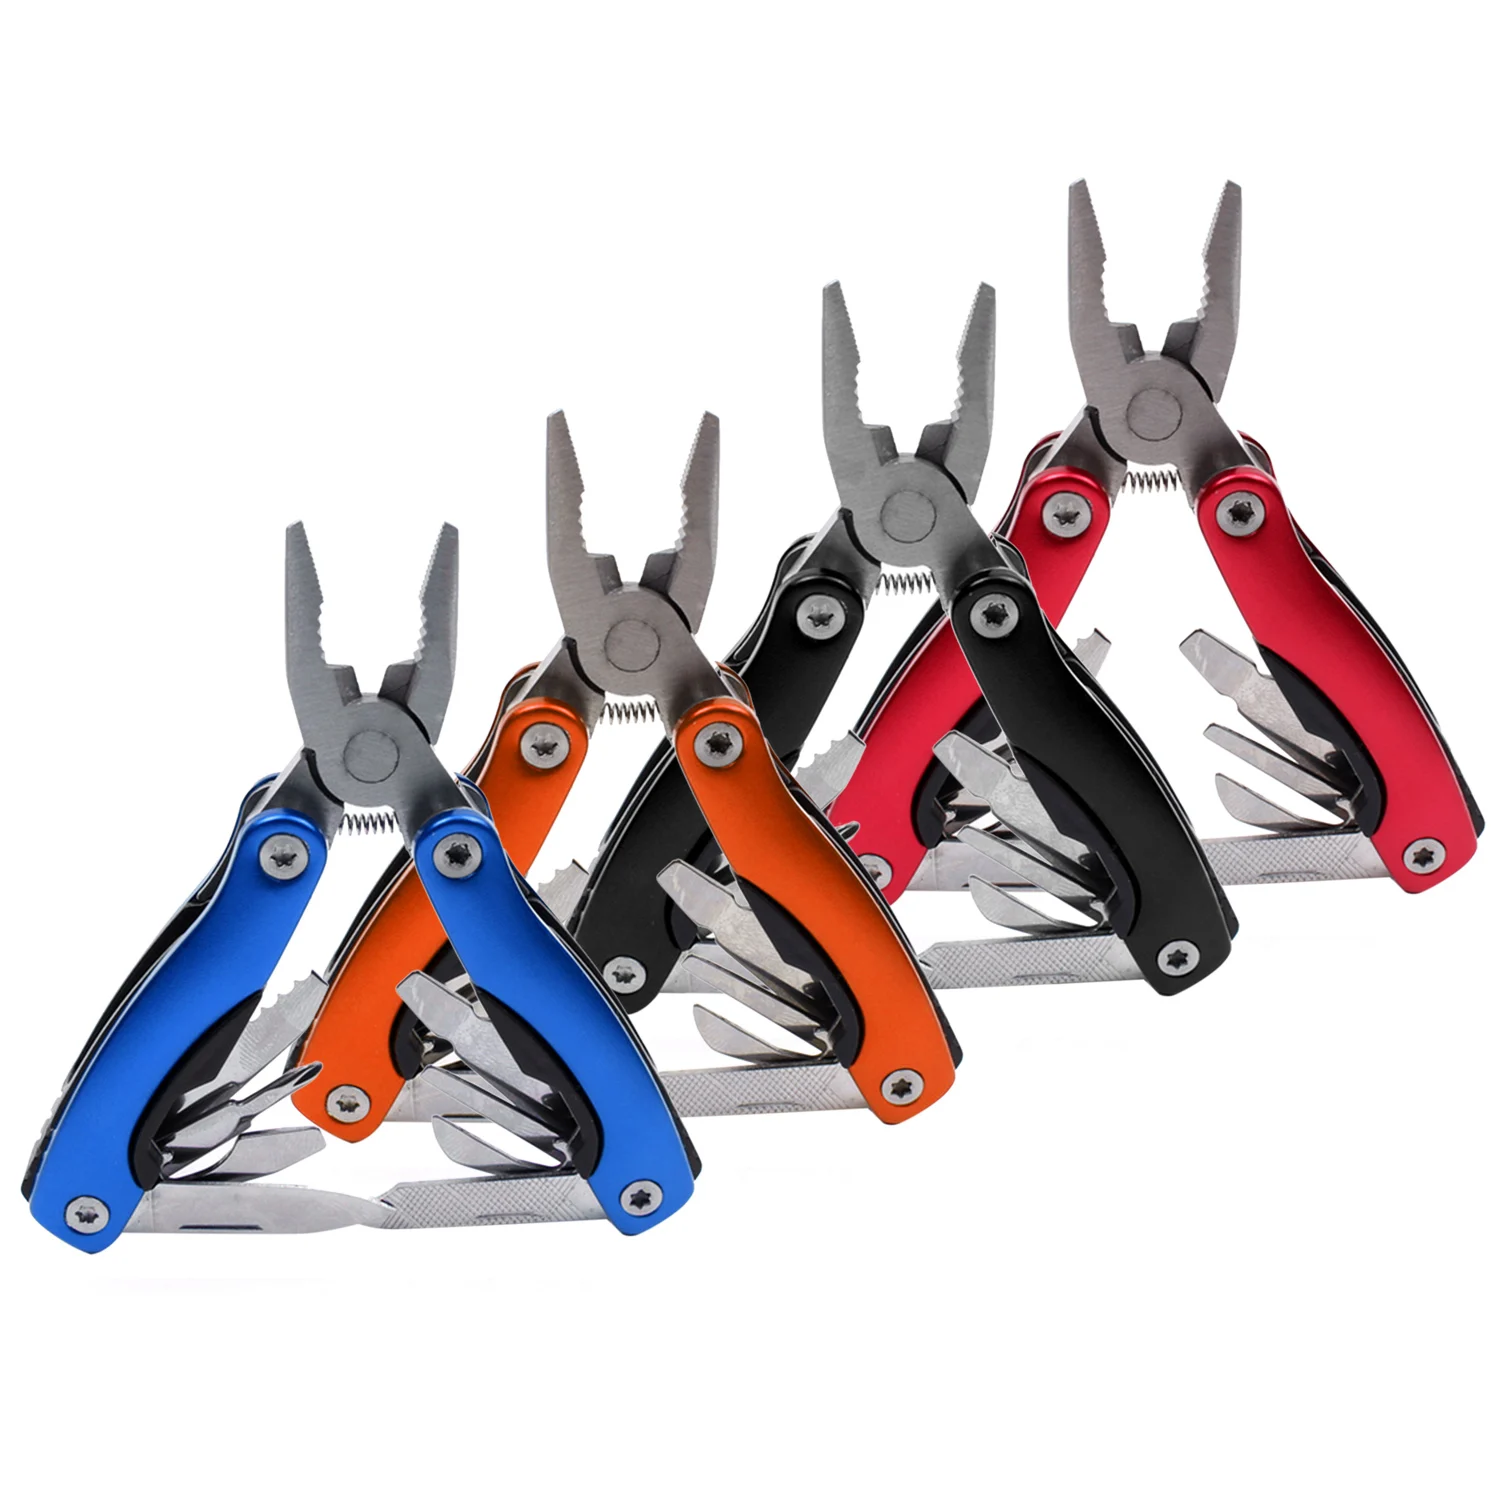 

Outdoor Multitool Pliers Serrated Knife Jaw Hand Tools+Screwdriver+Pliers+Knife Multitool Knife Set Survival Gear Multifunction